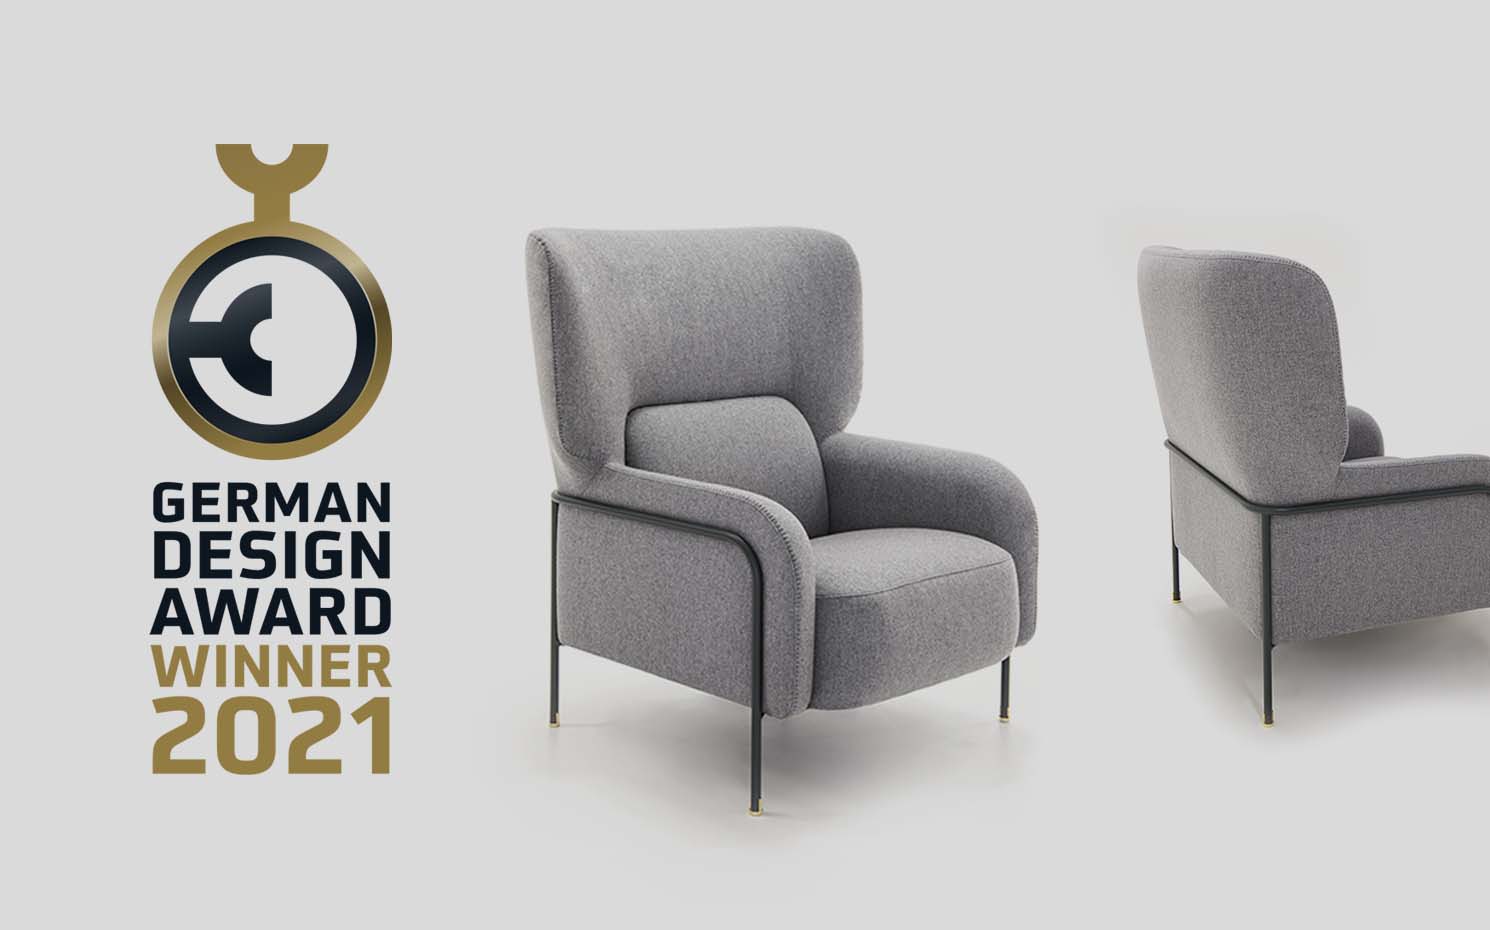 German Design Award 2021